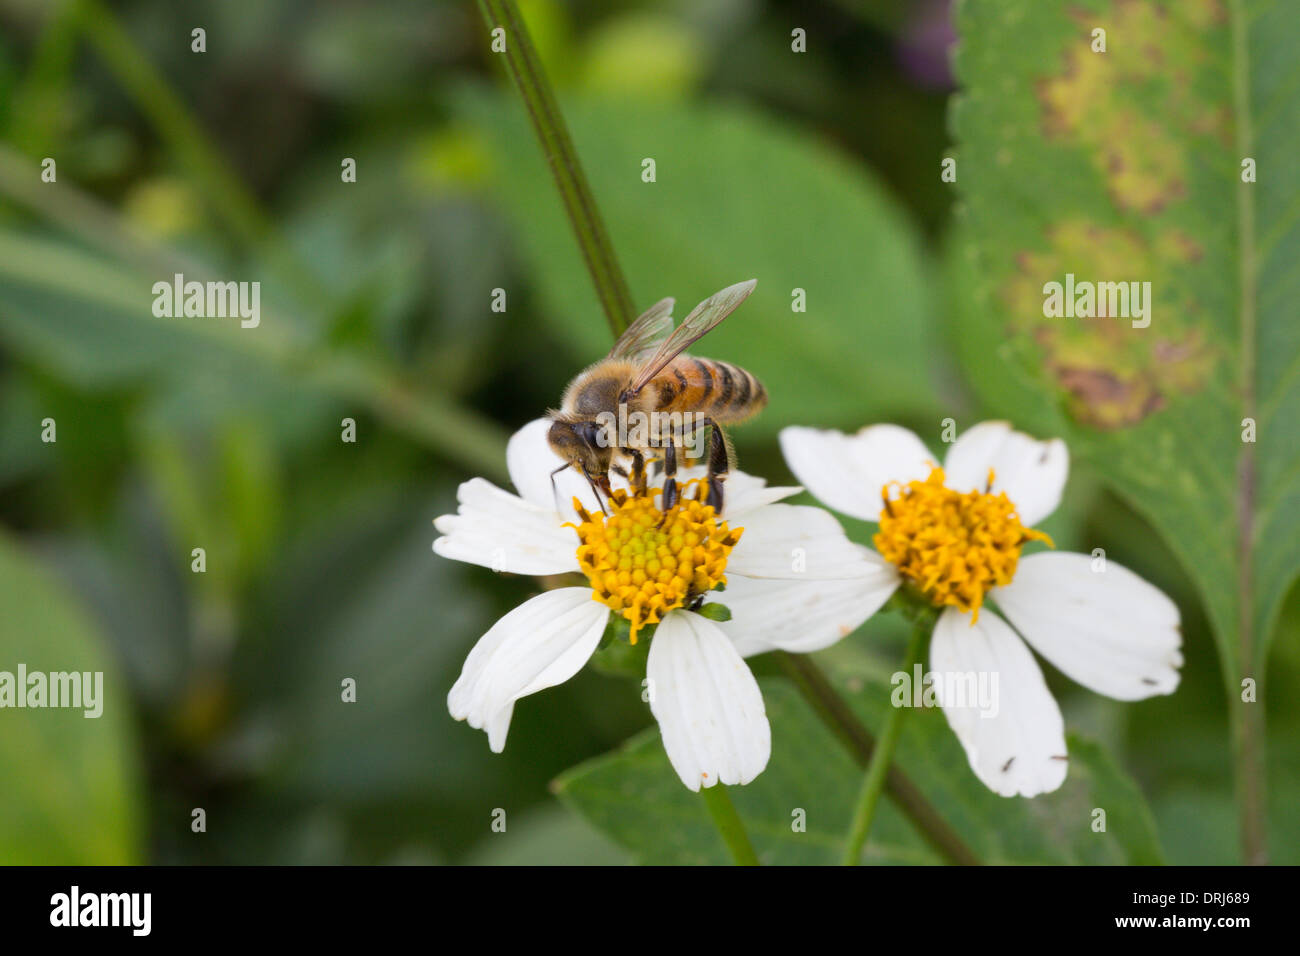 Closeup of honeybee pollinating white flower Stock Photo